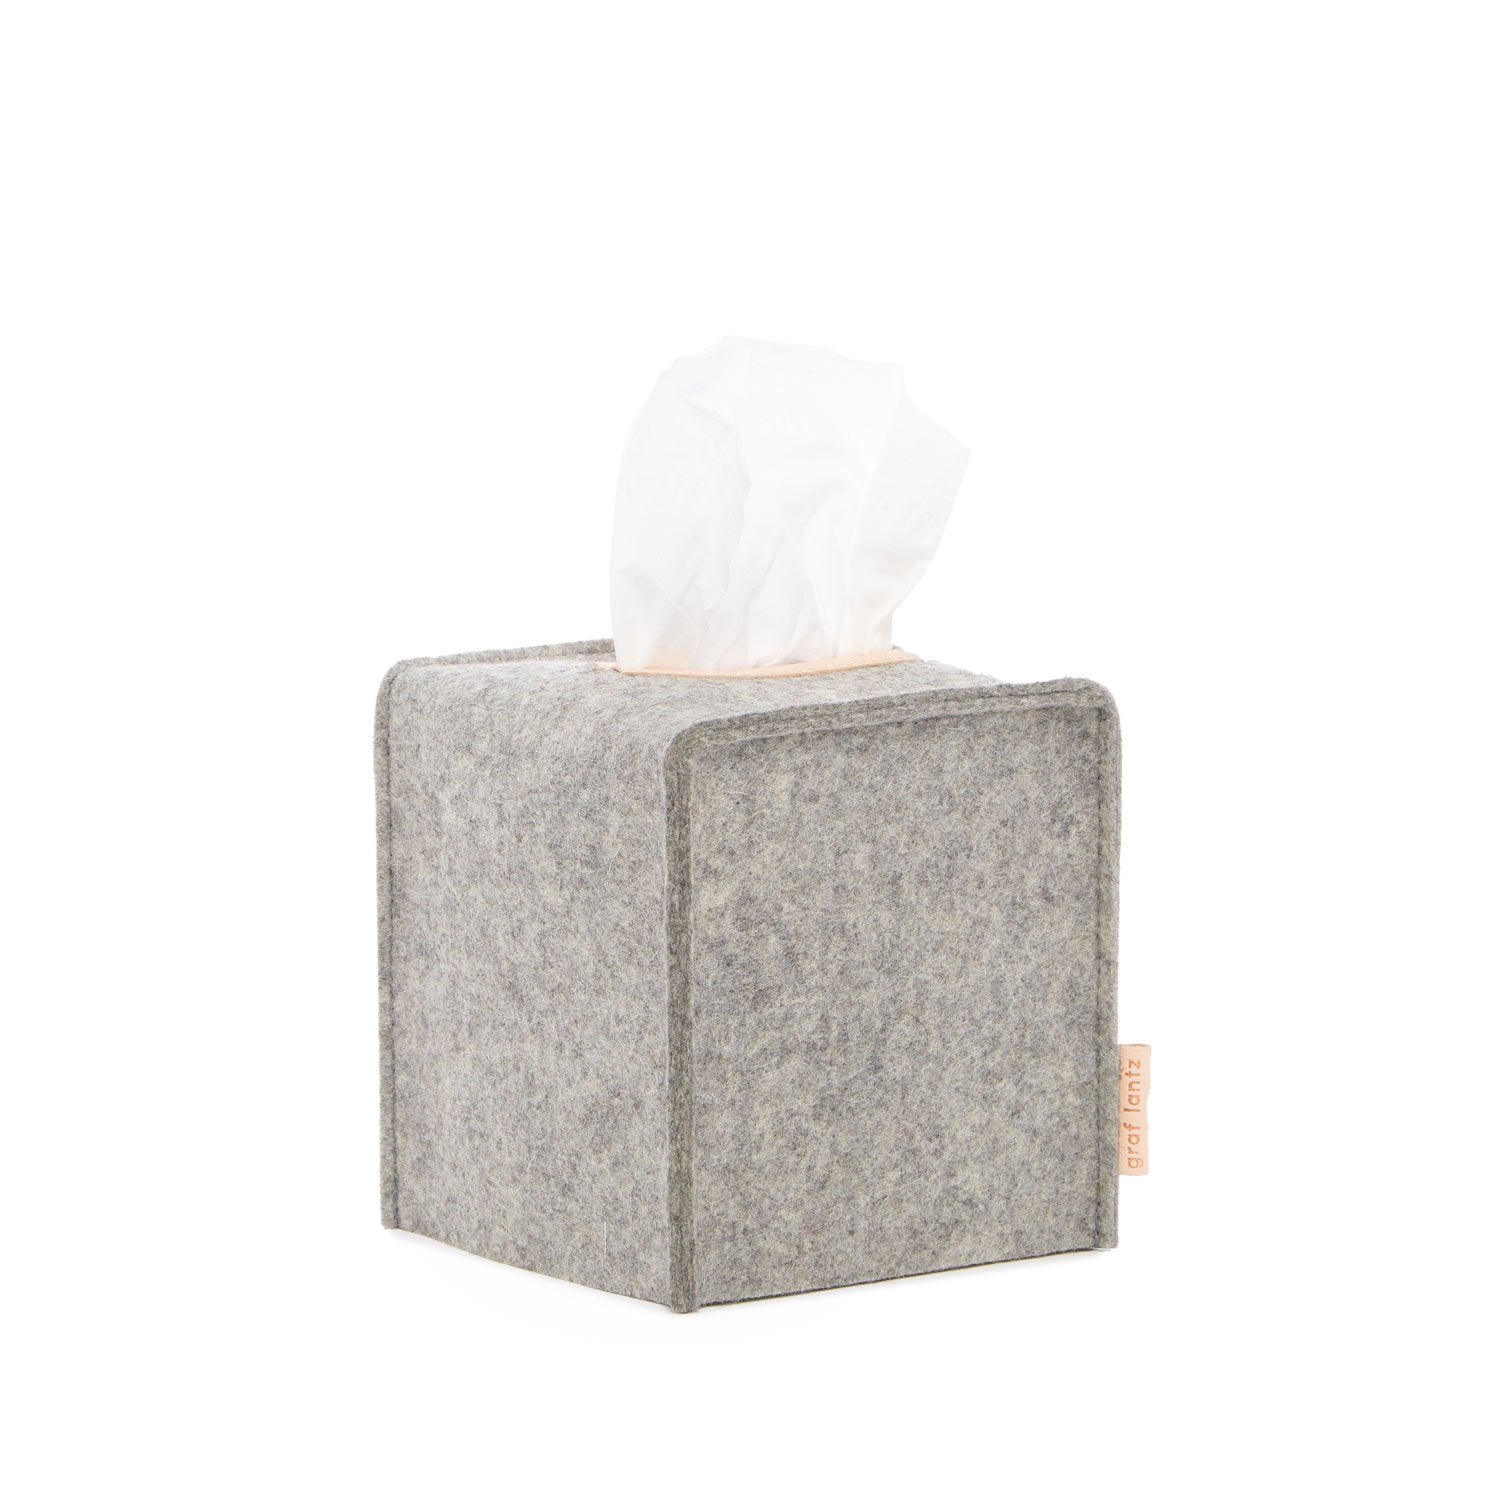 Tissue Box Cover Small - Granite Felt